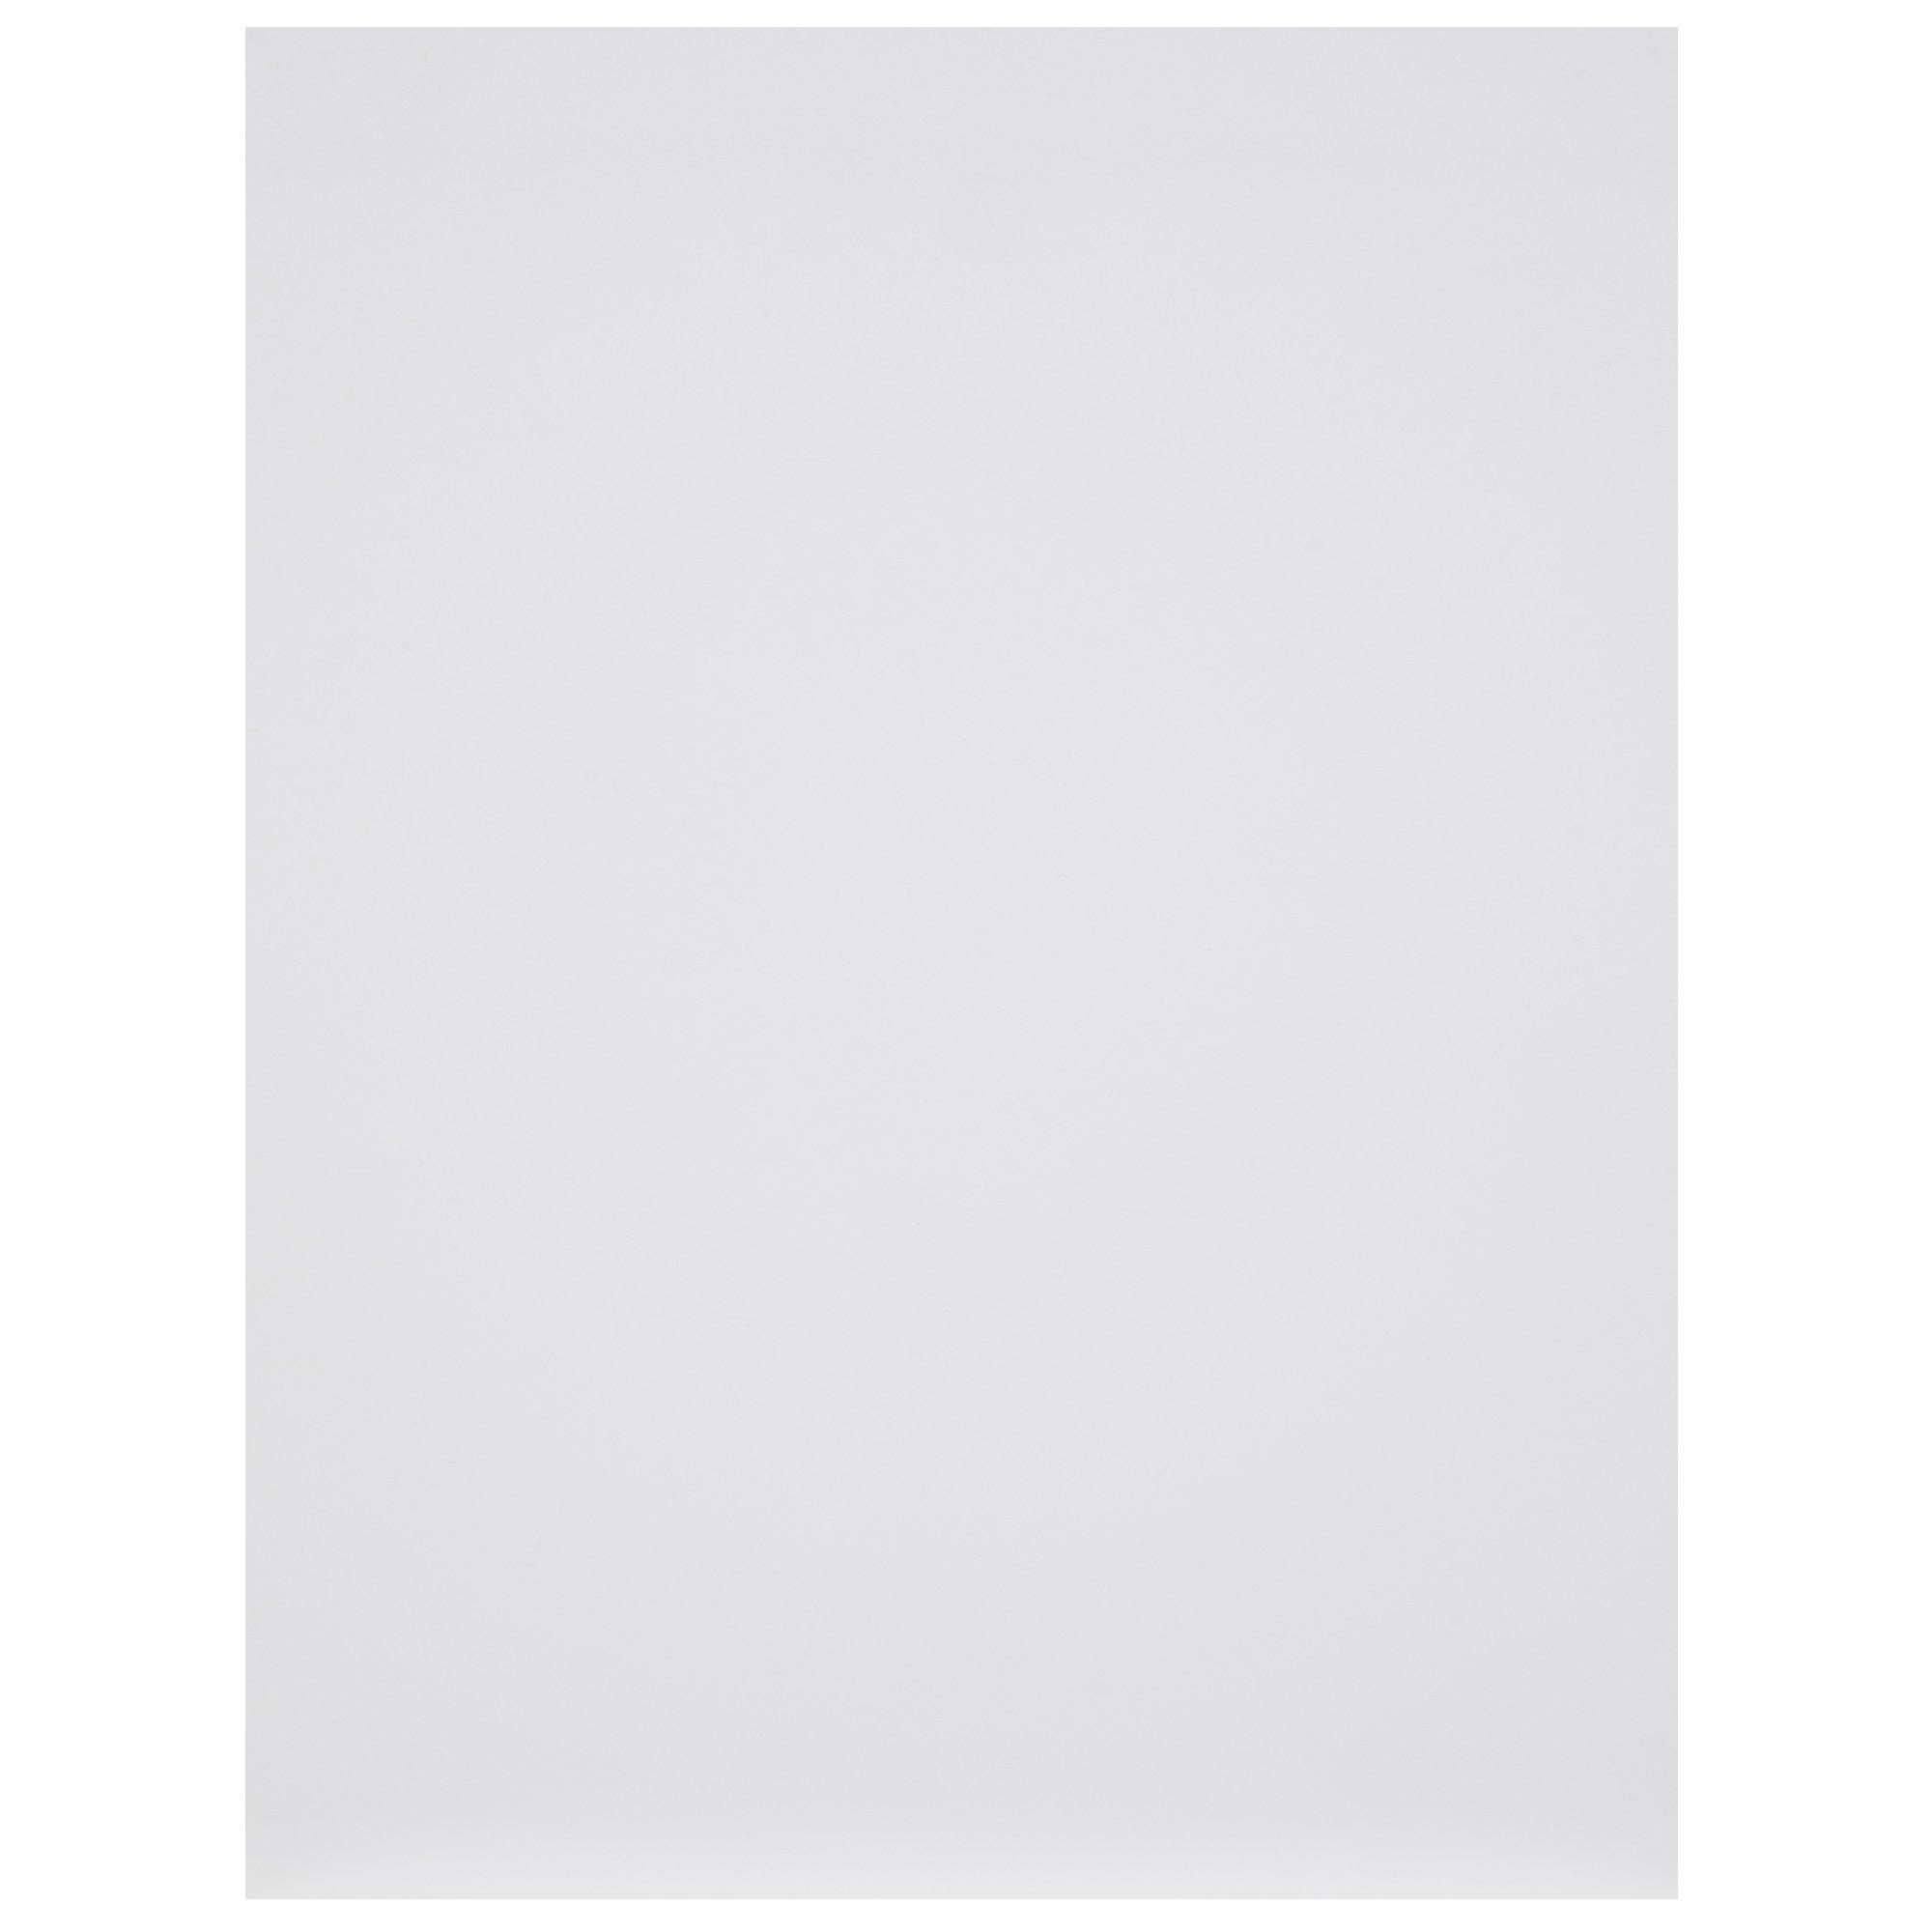 Paper Studio White 8 5x11 Cardstock Scrapbooking Pack 50 Sheets